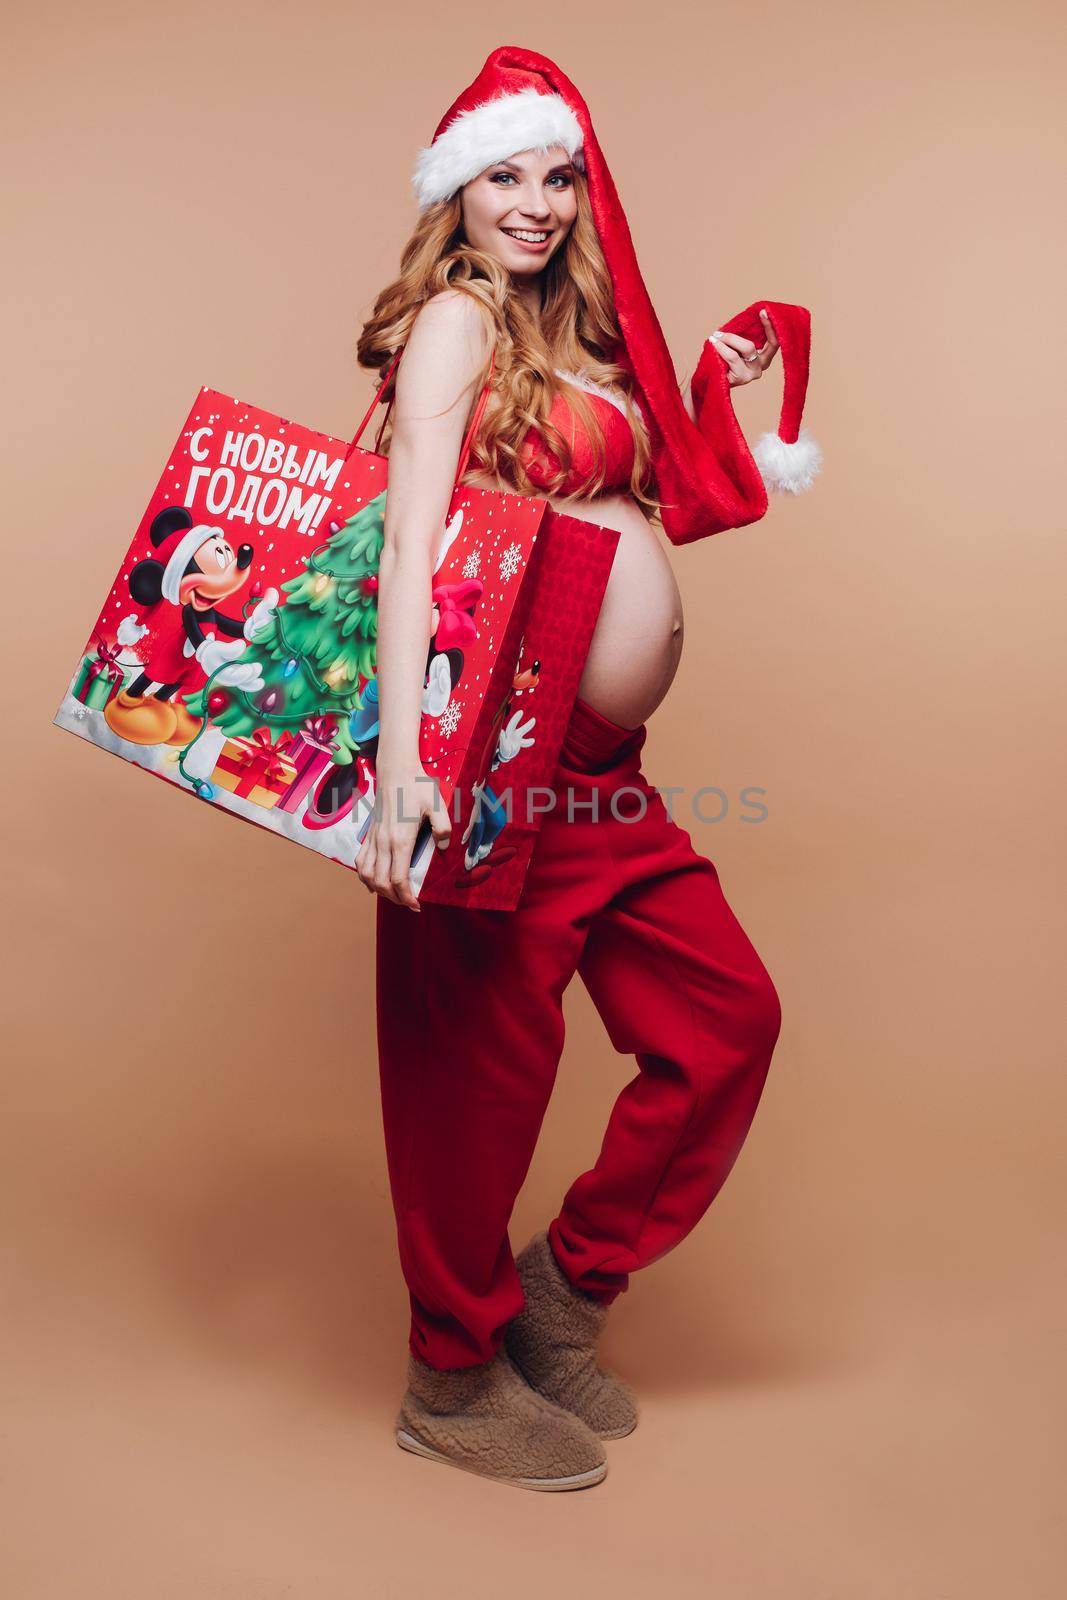 11 27 2019 Belarus Minsk: Lovely pregnant woman posing with gift bag in studio by StudioLucky